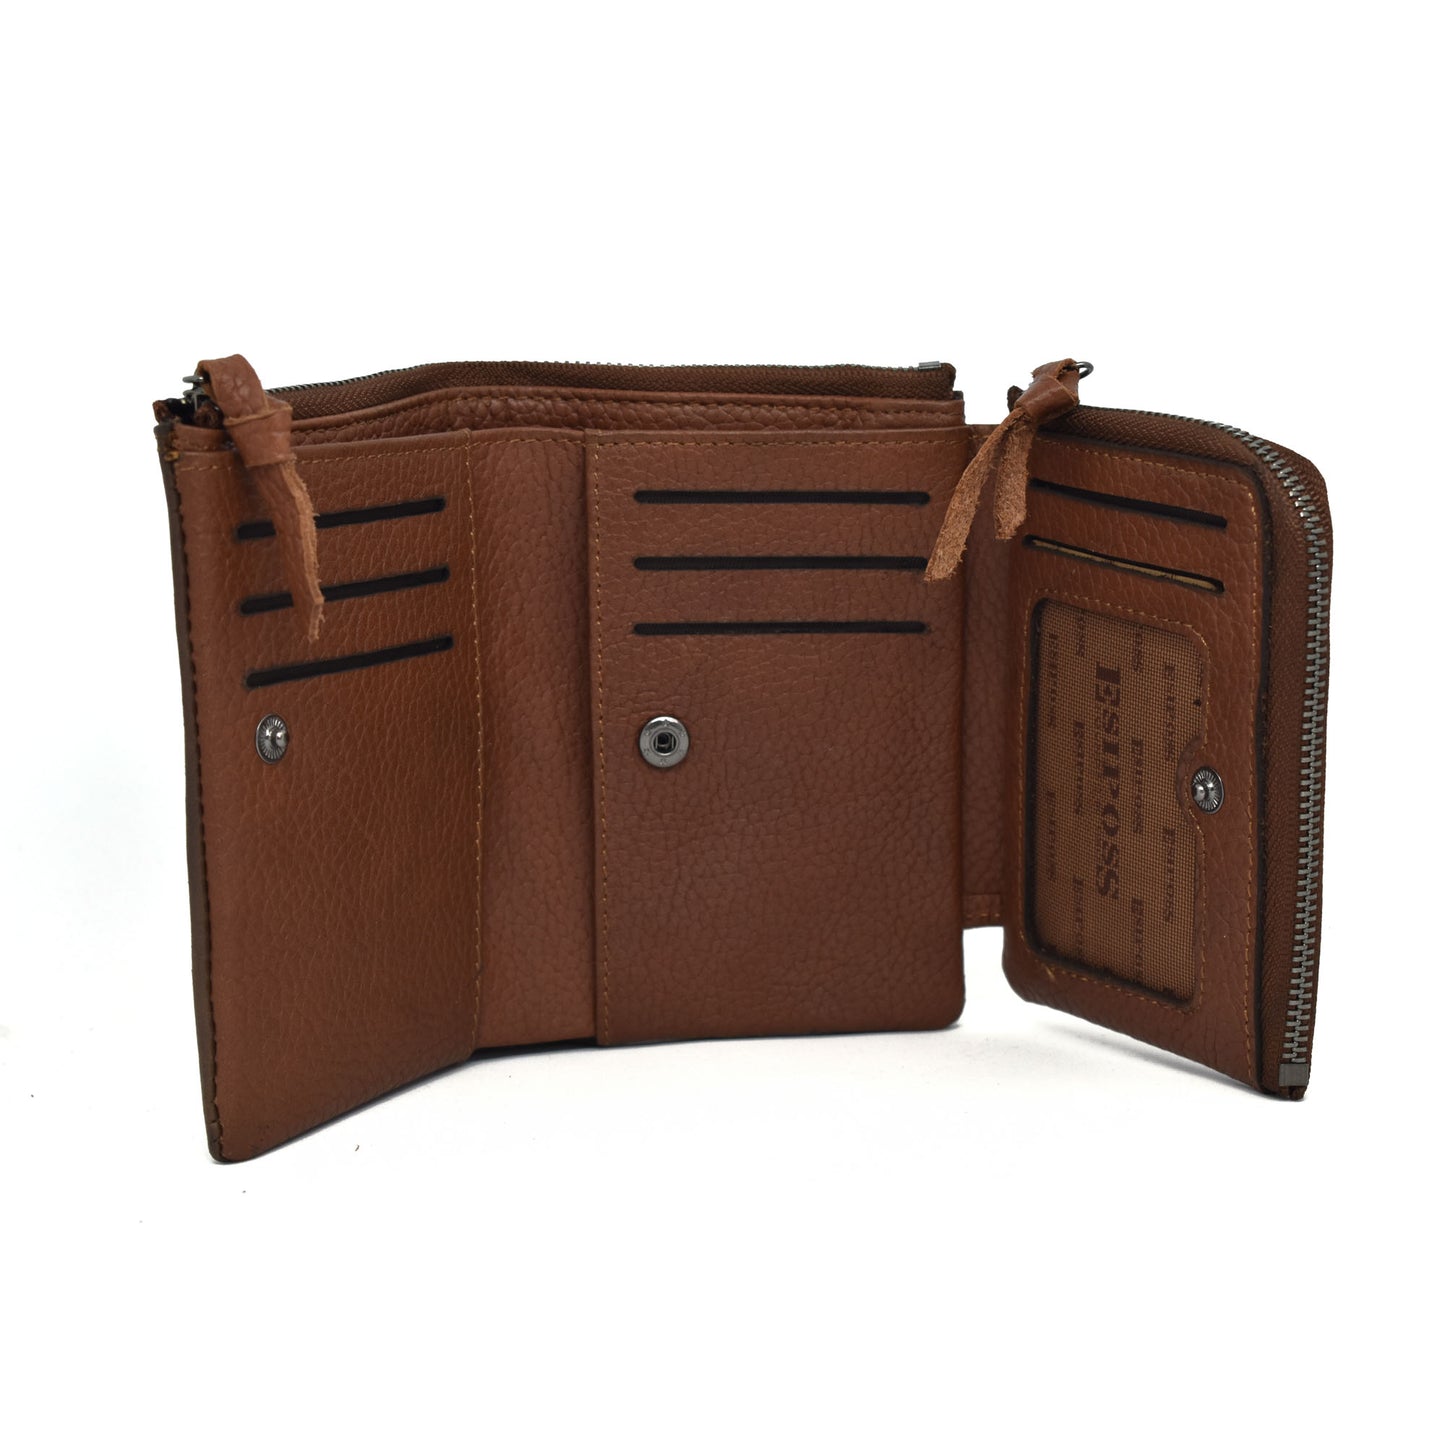 Original Esiposs Leather Wallet | Pocket Size Wallet | EPS 24